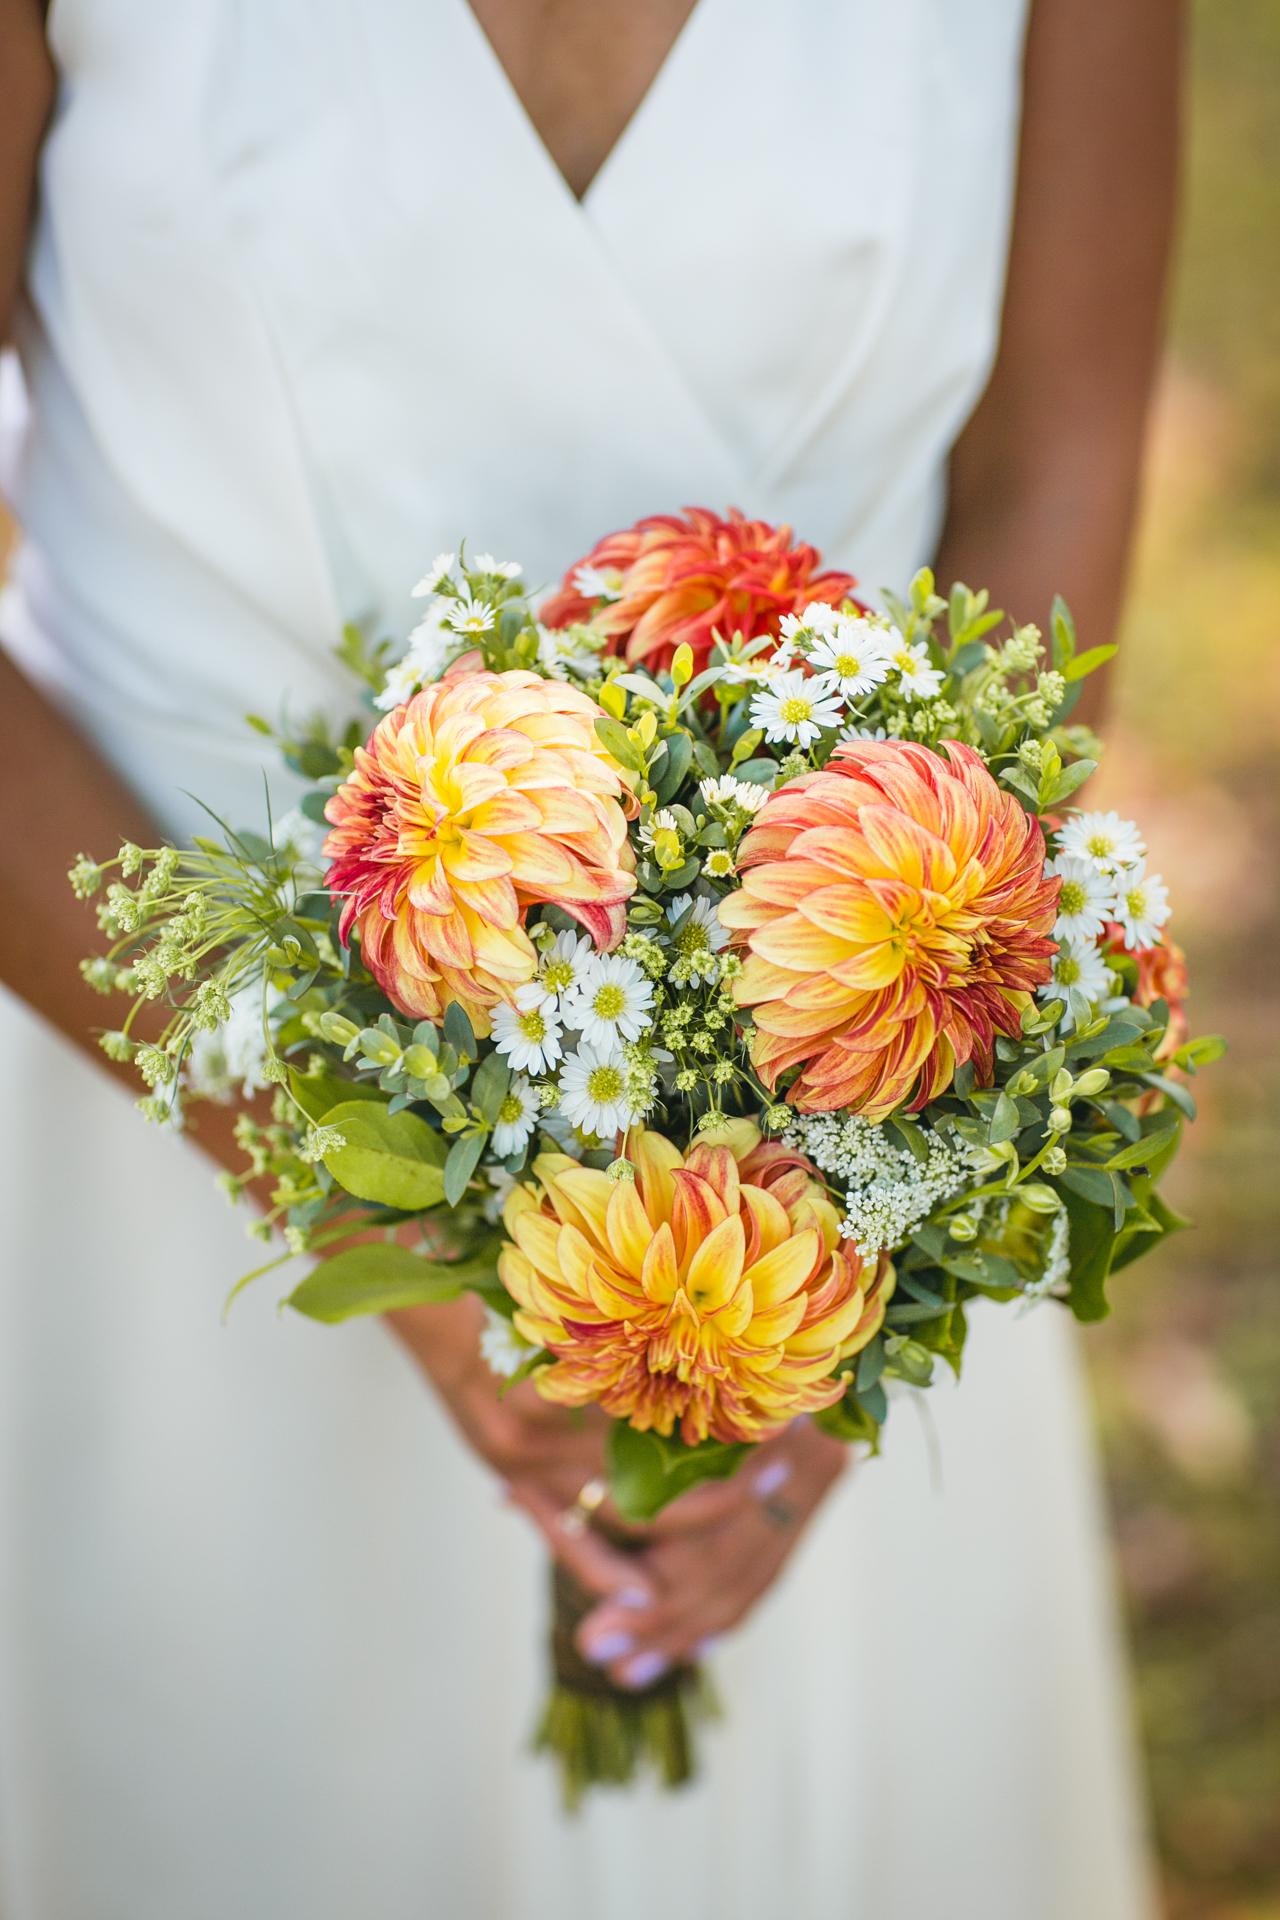  The bride holding her special arrangement floral bouquet 